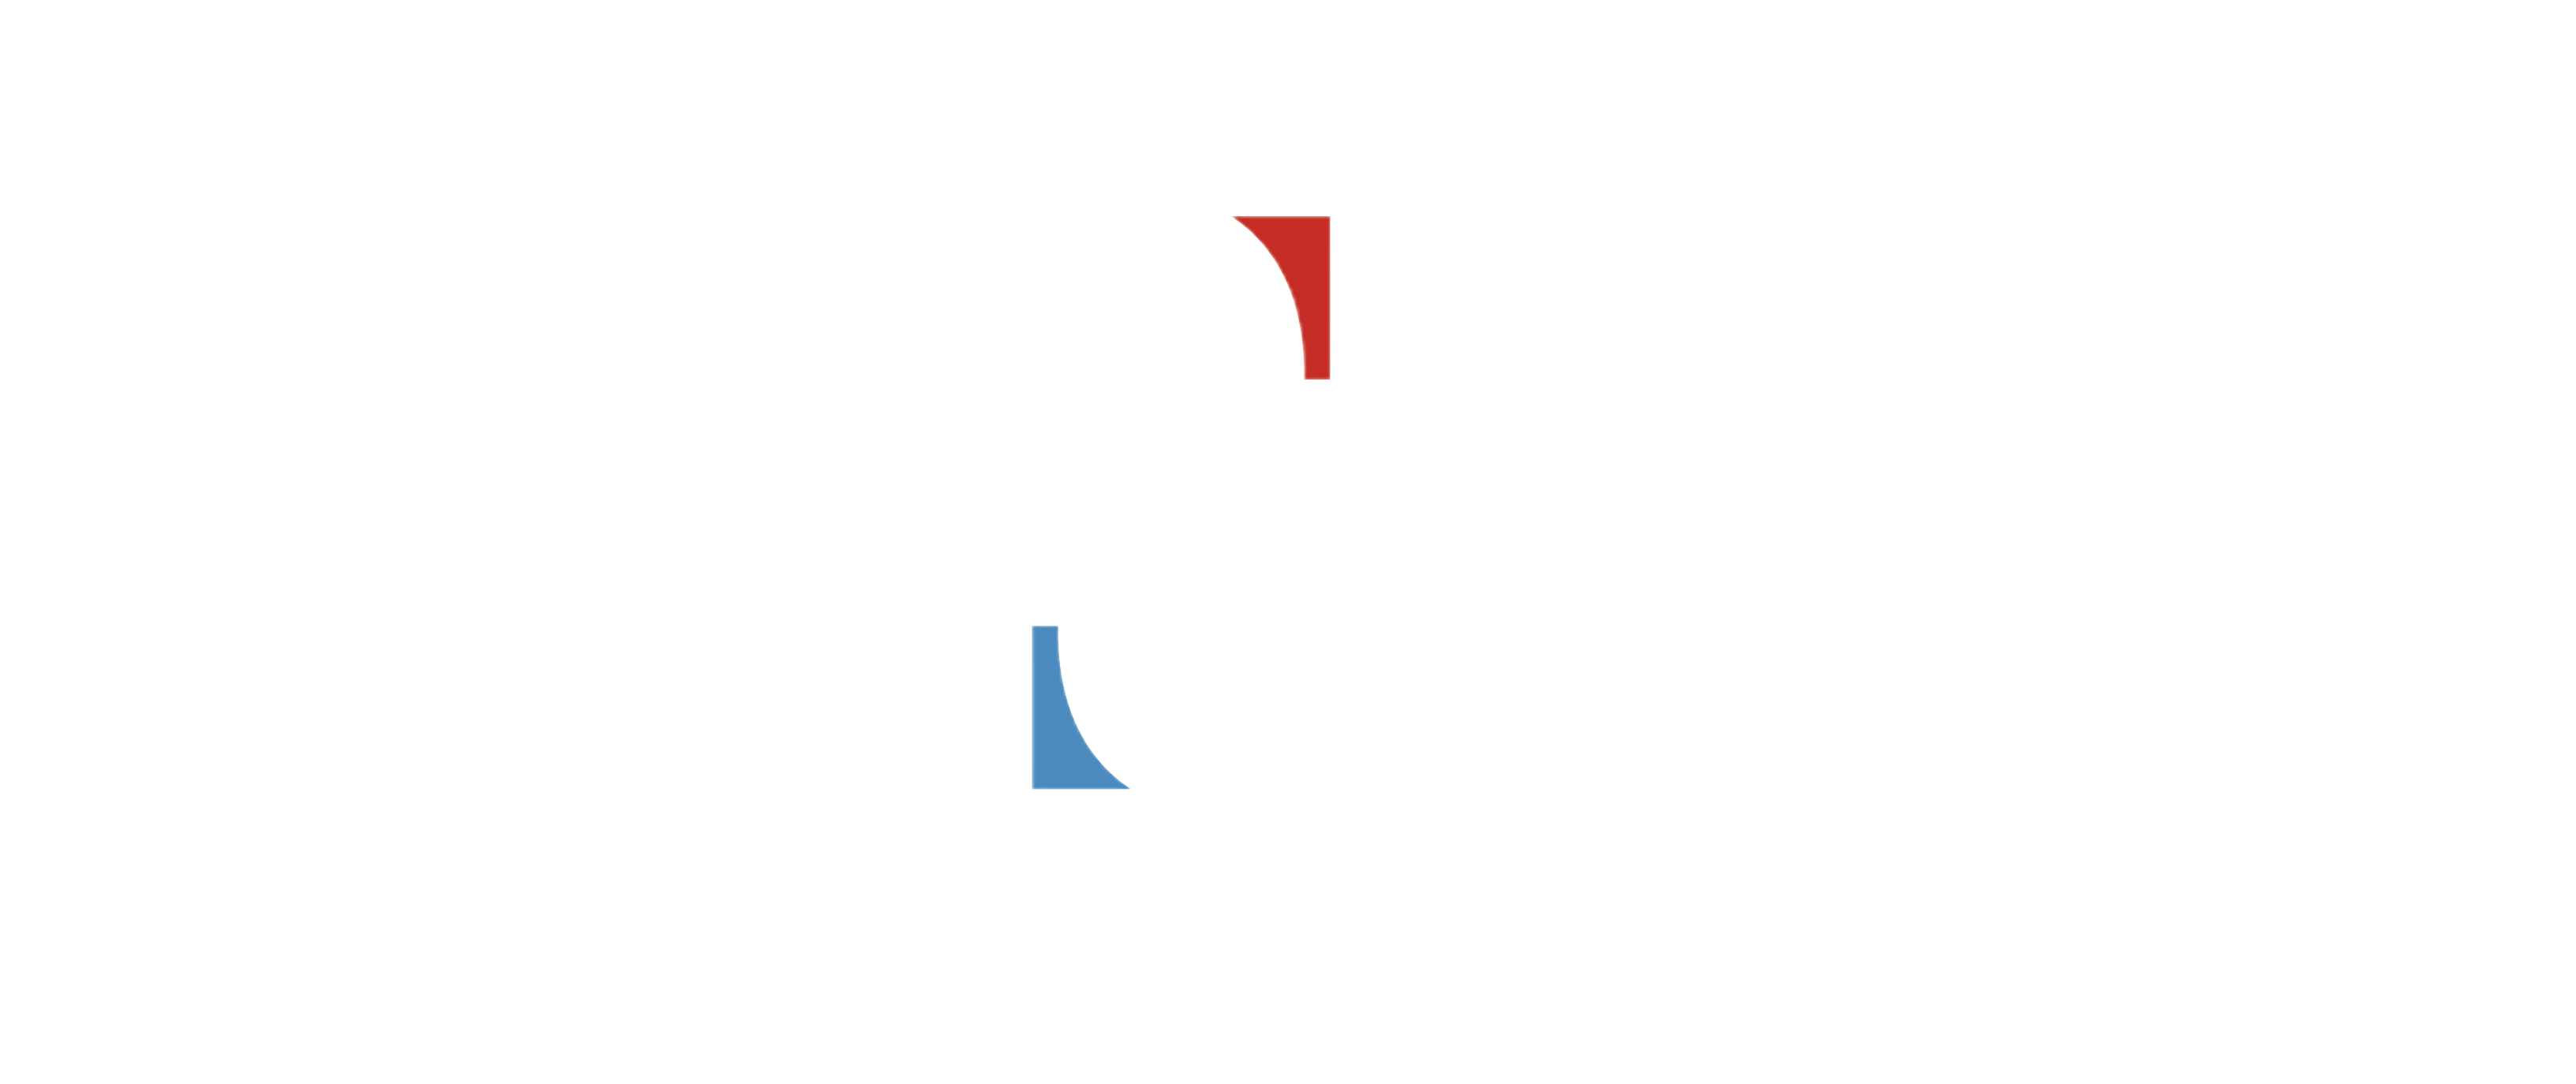 Axis Mechanical